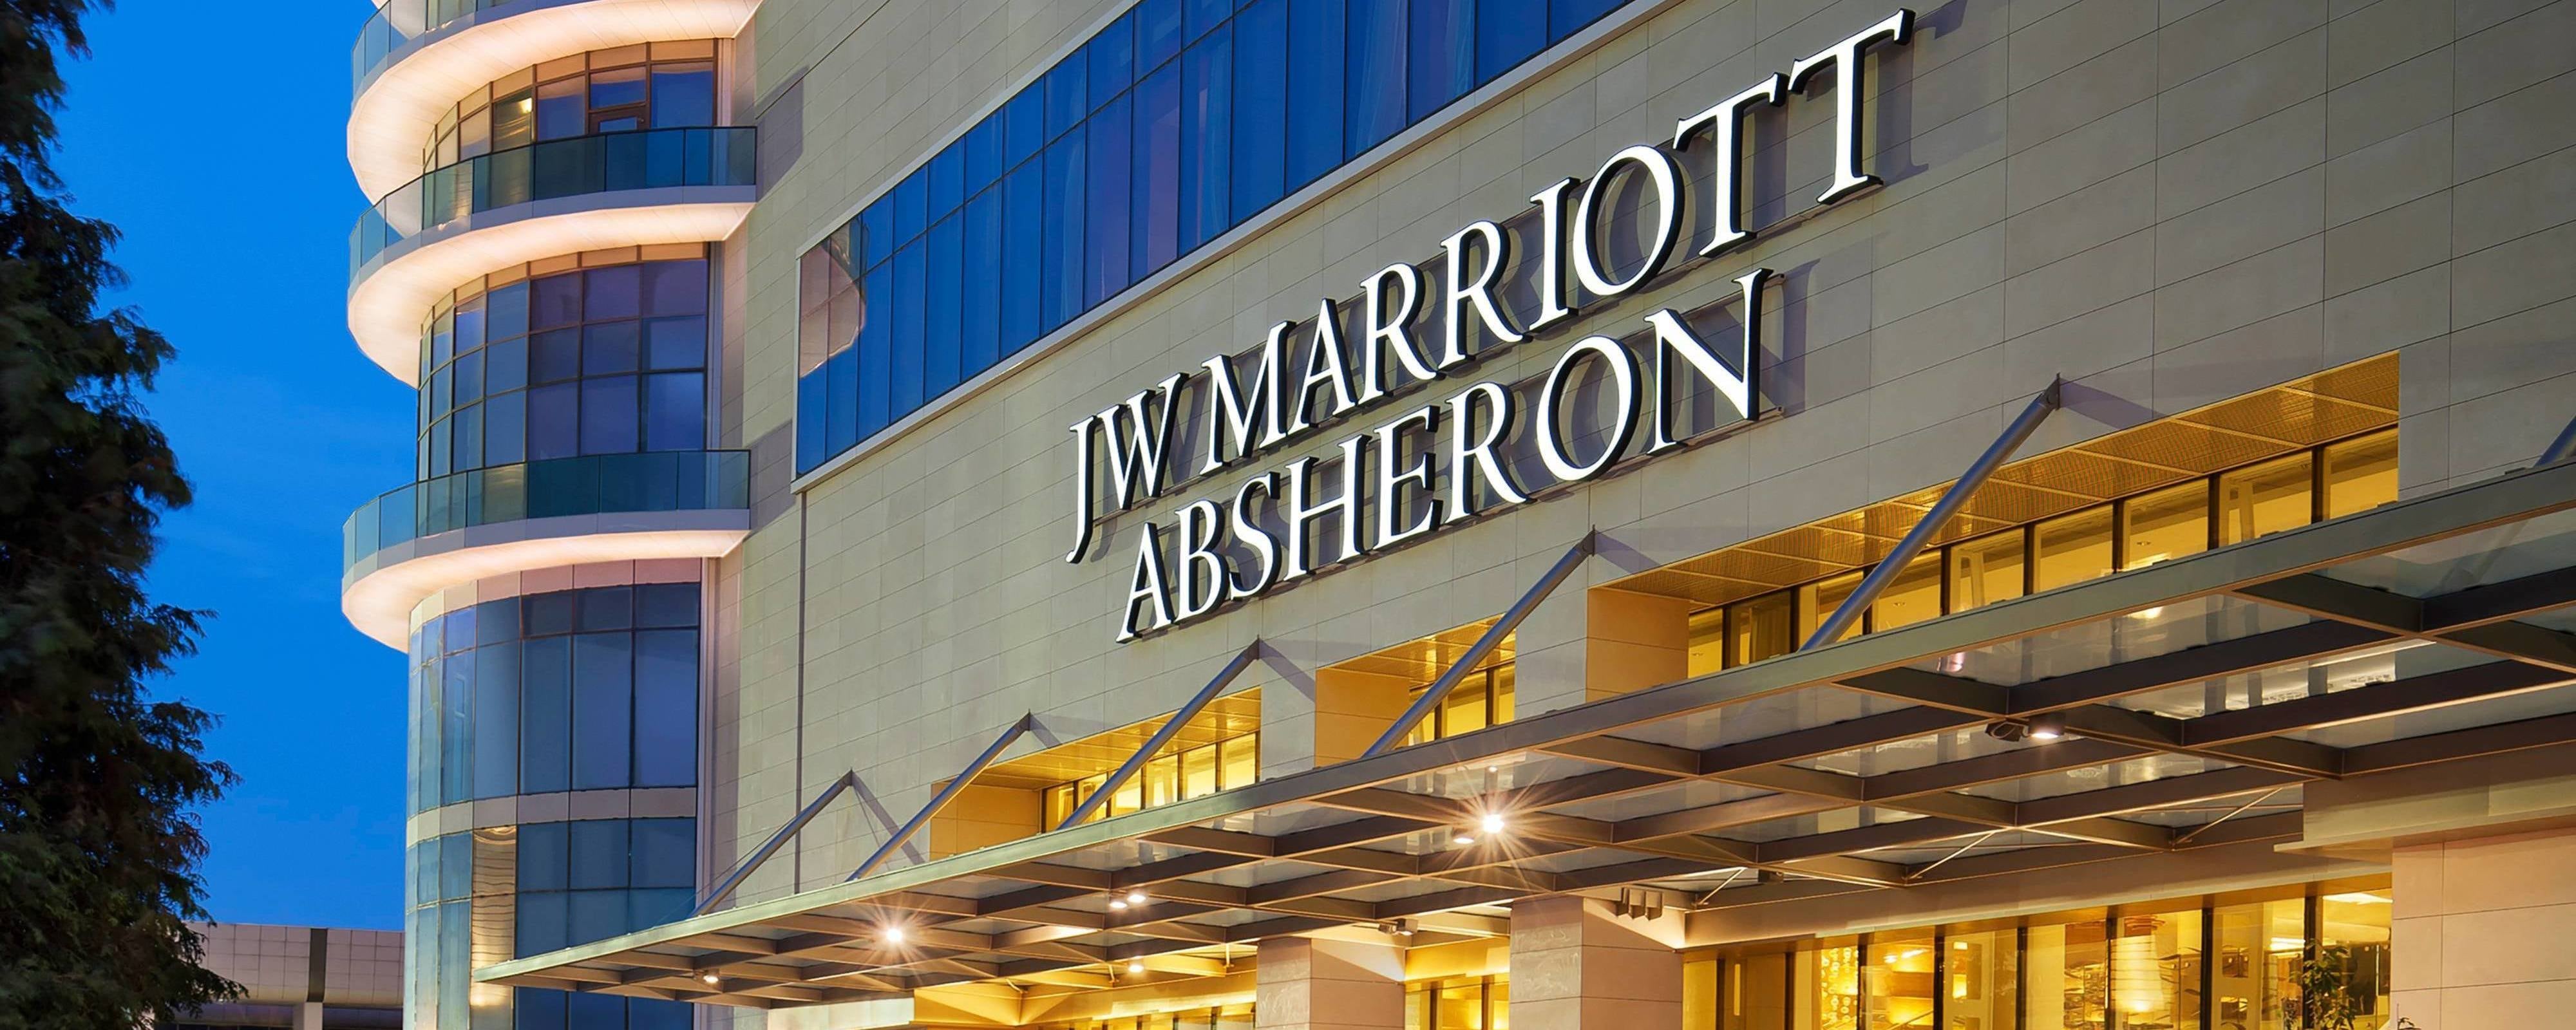 Image for JW Marriott Absheron Baku, a Marriott hotel.